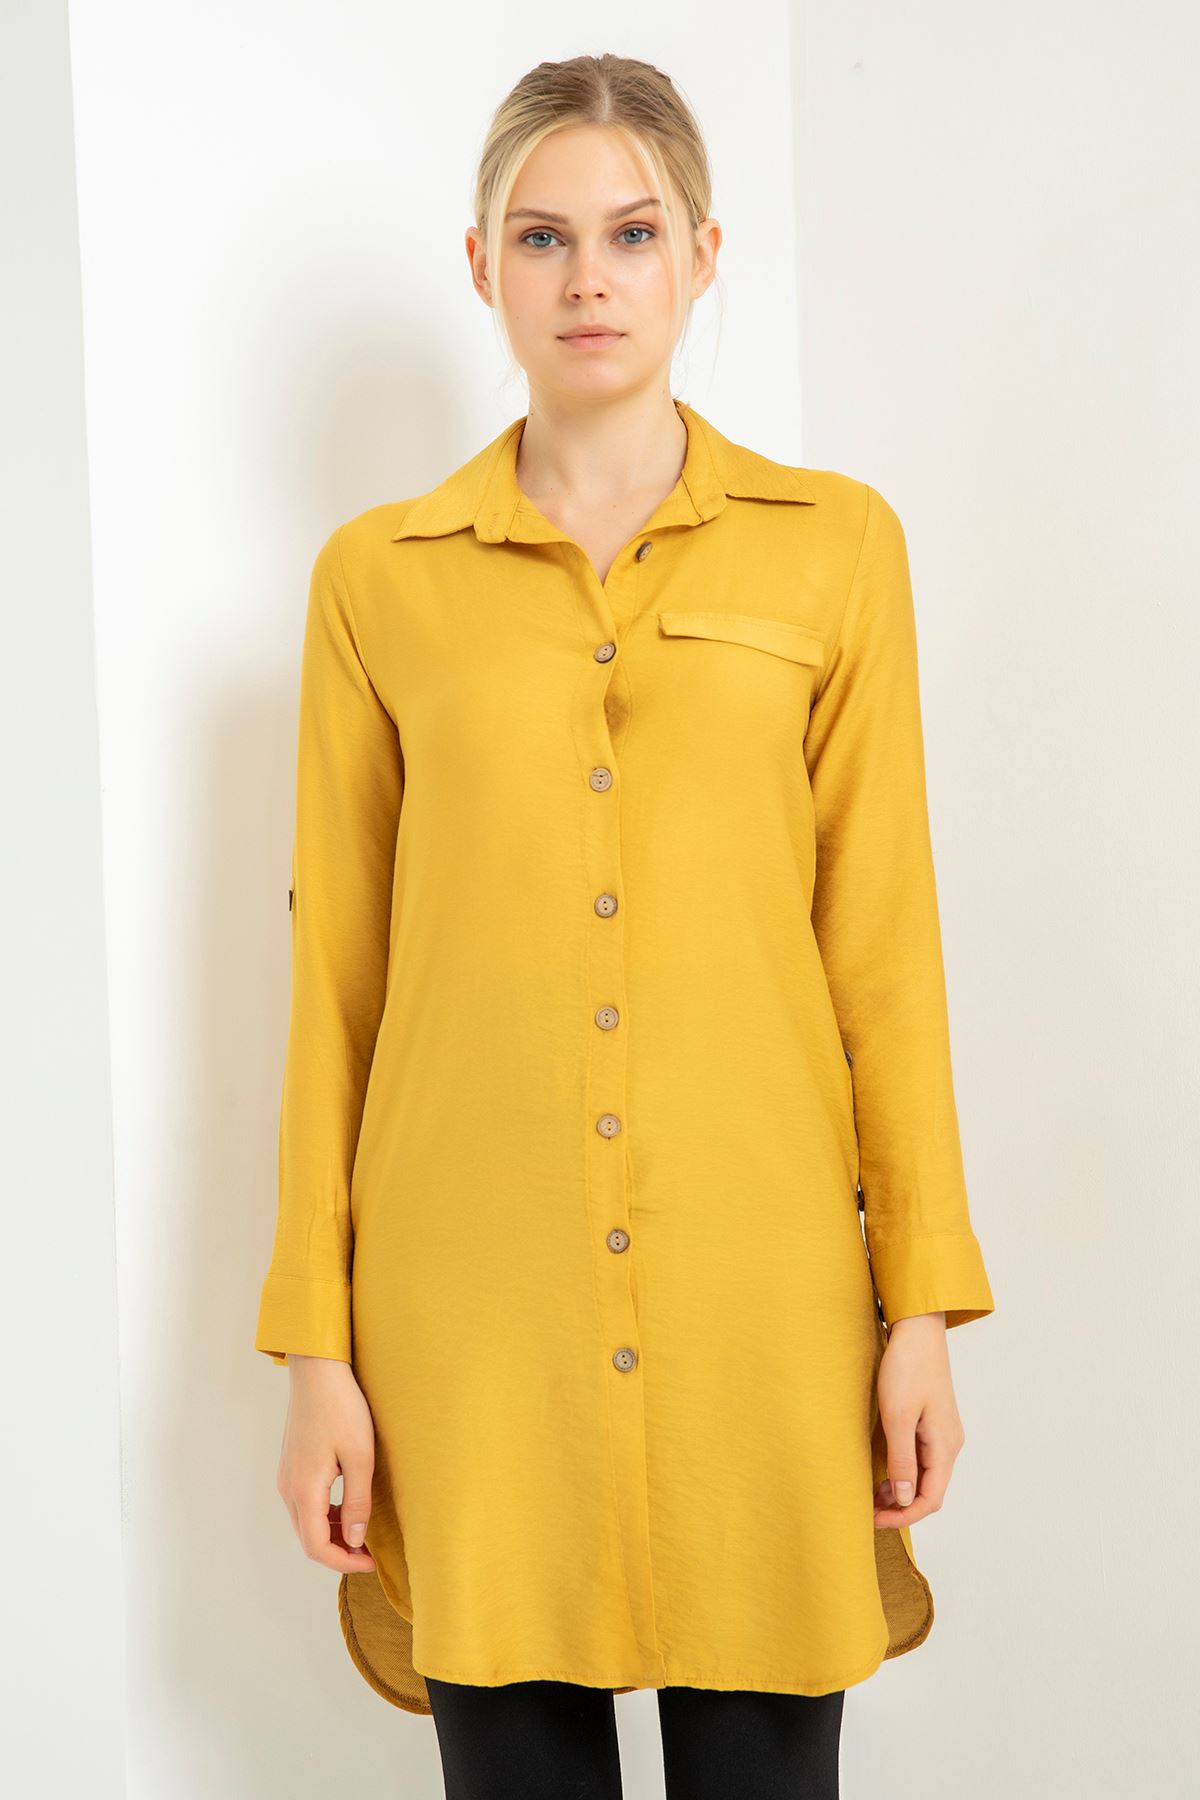 Bodrum Fabric Long Sleeve Shirt Collar Below Hip Pocket Detailed Women Tunic - Mustard